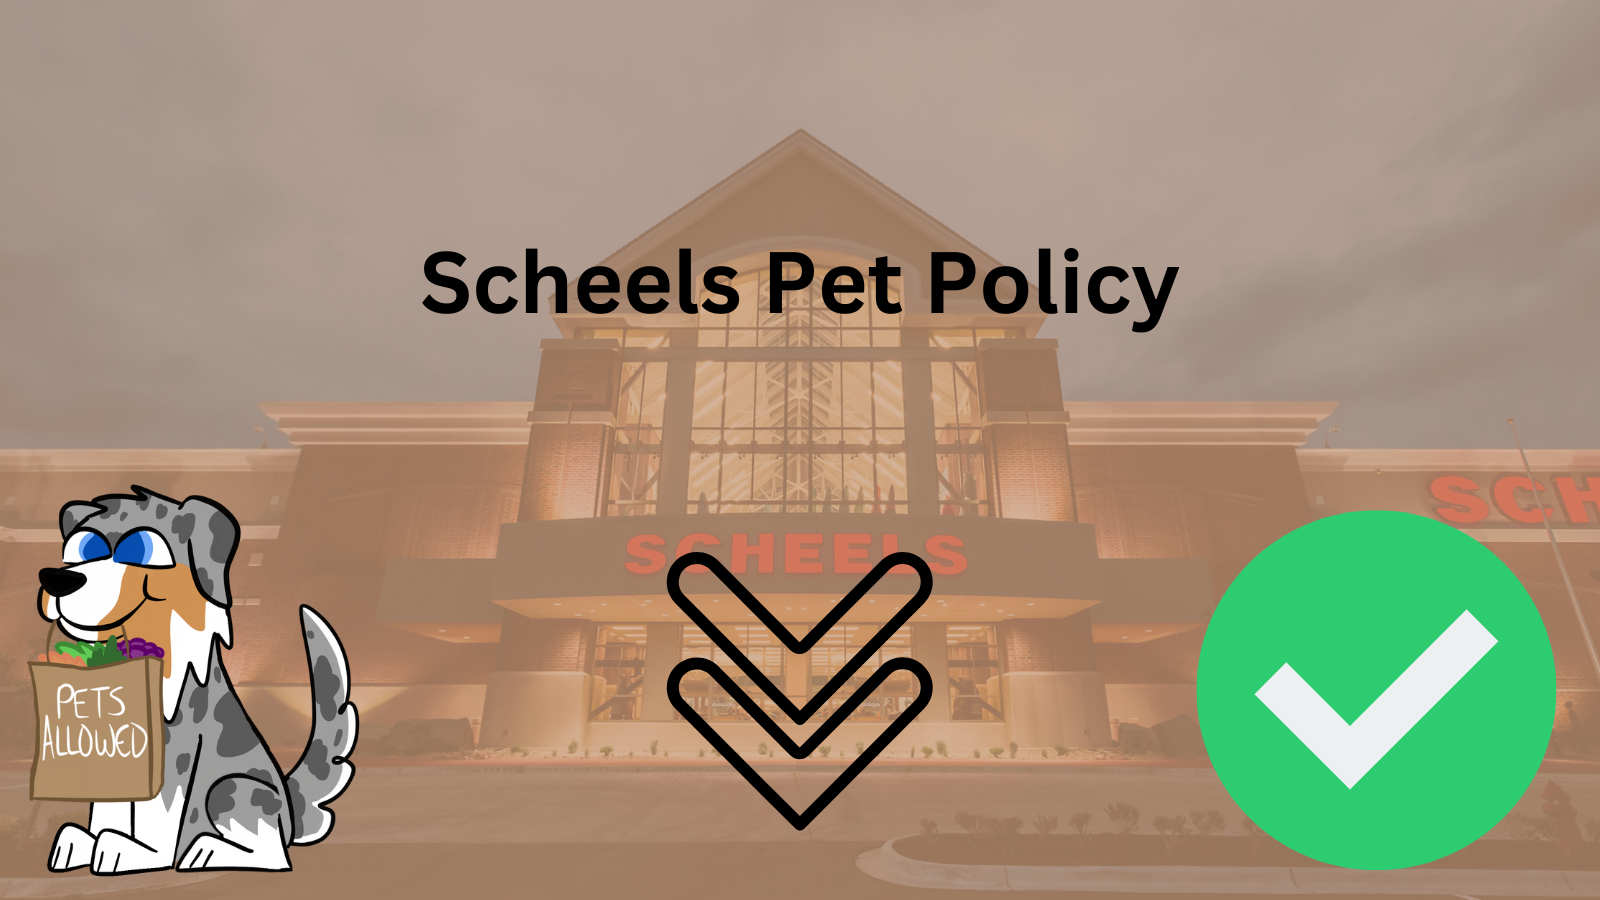 Image Text: "Scheels Pet Policy"